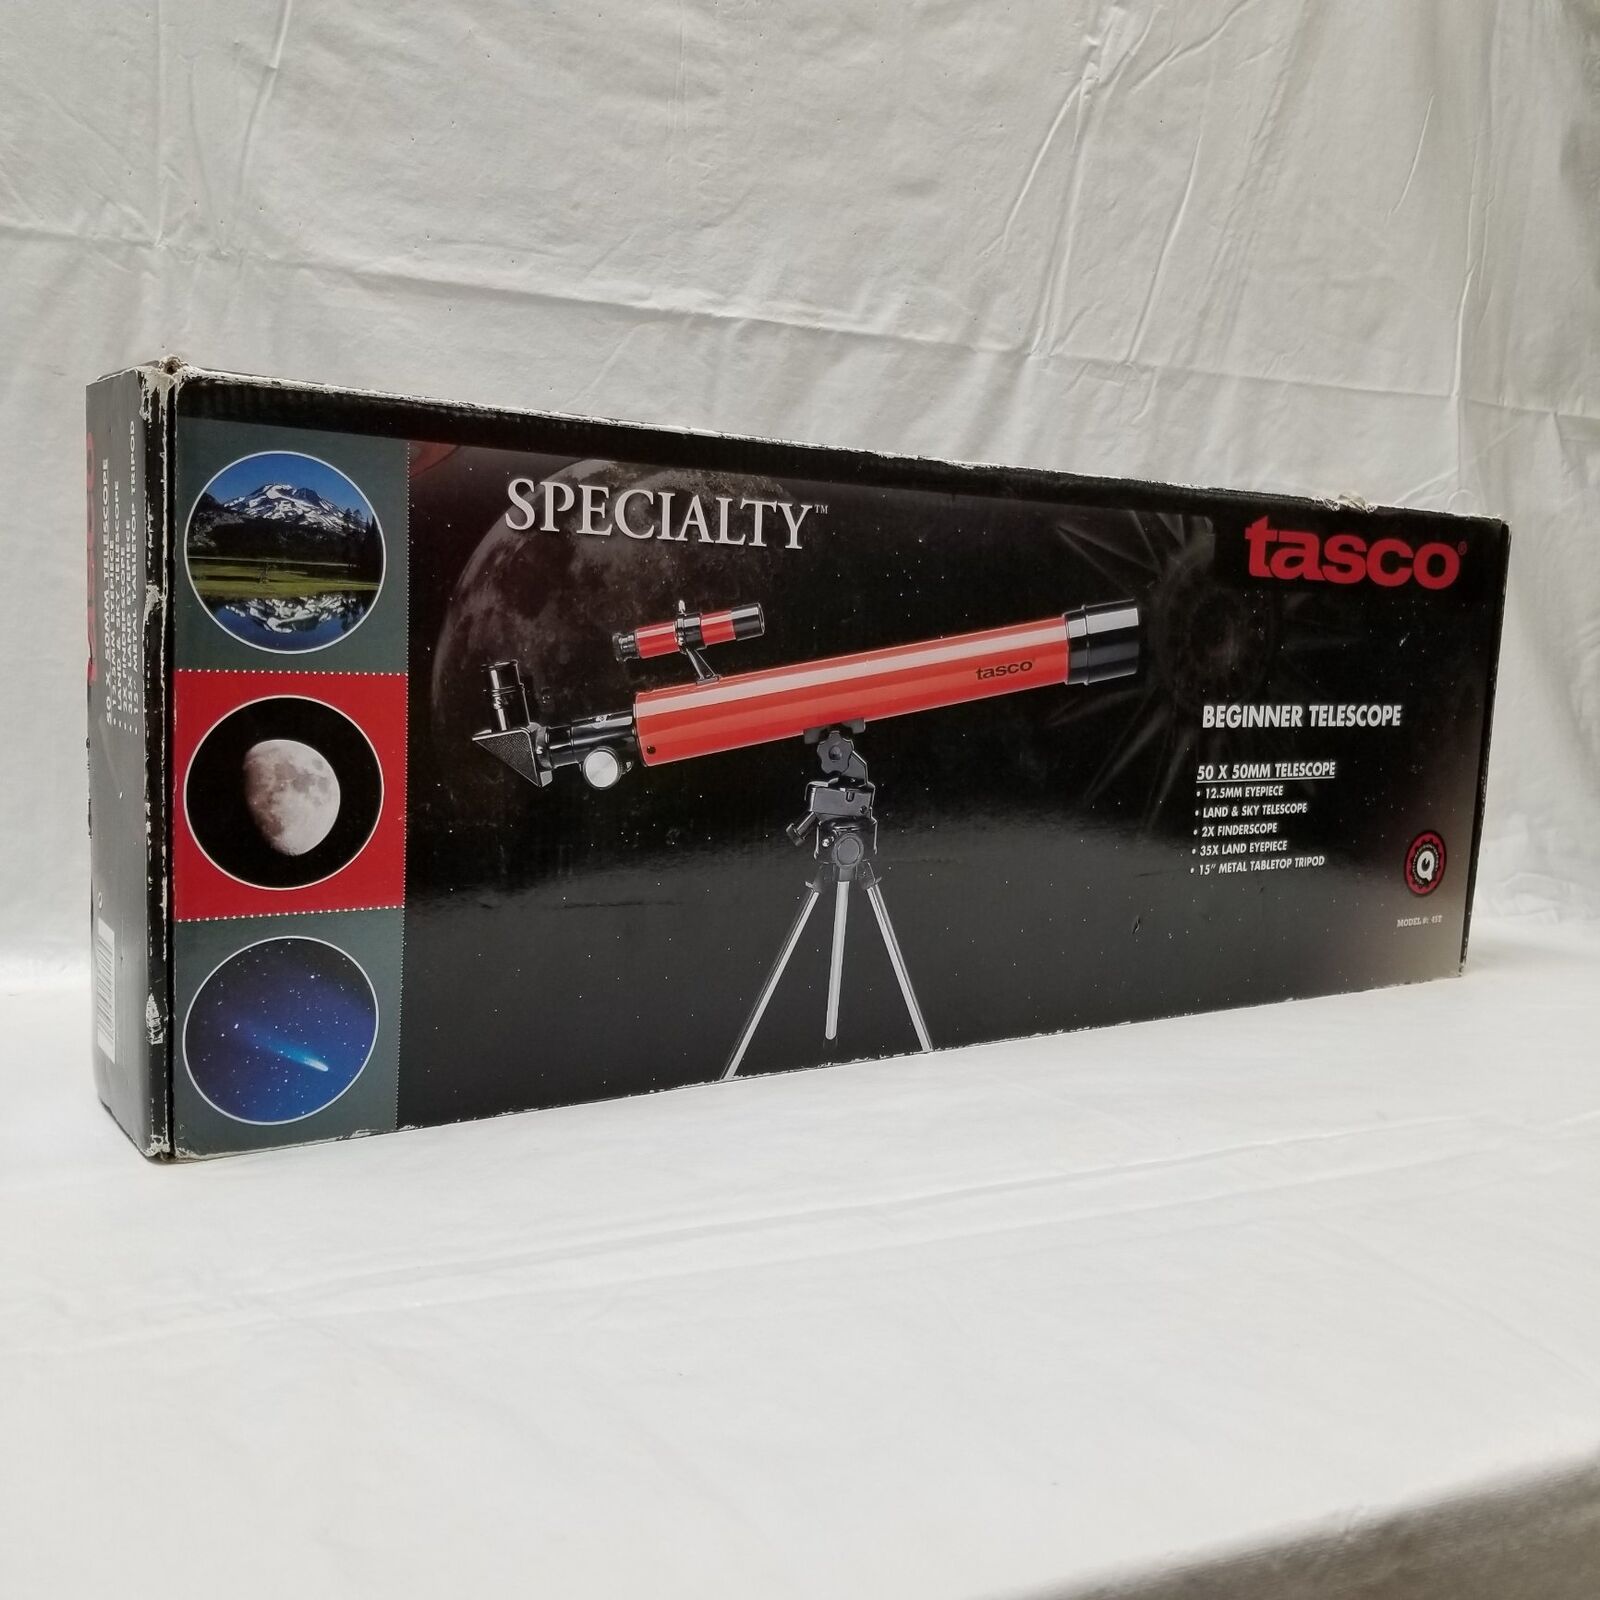 TASCO Specialty Beginner Telescope 50x50mm Model#45T In Box